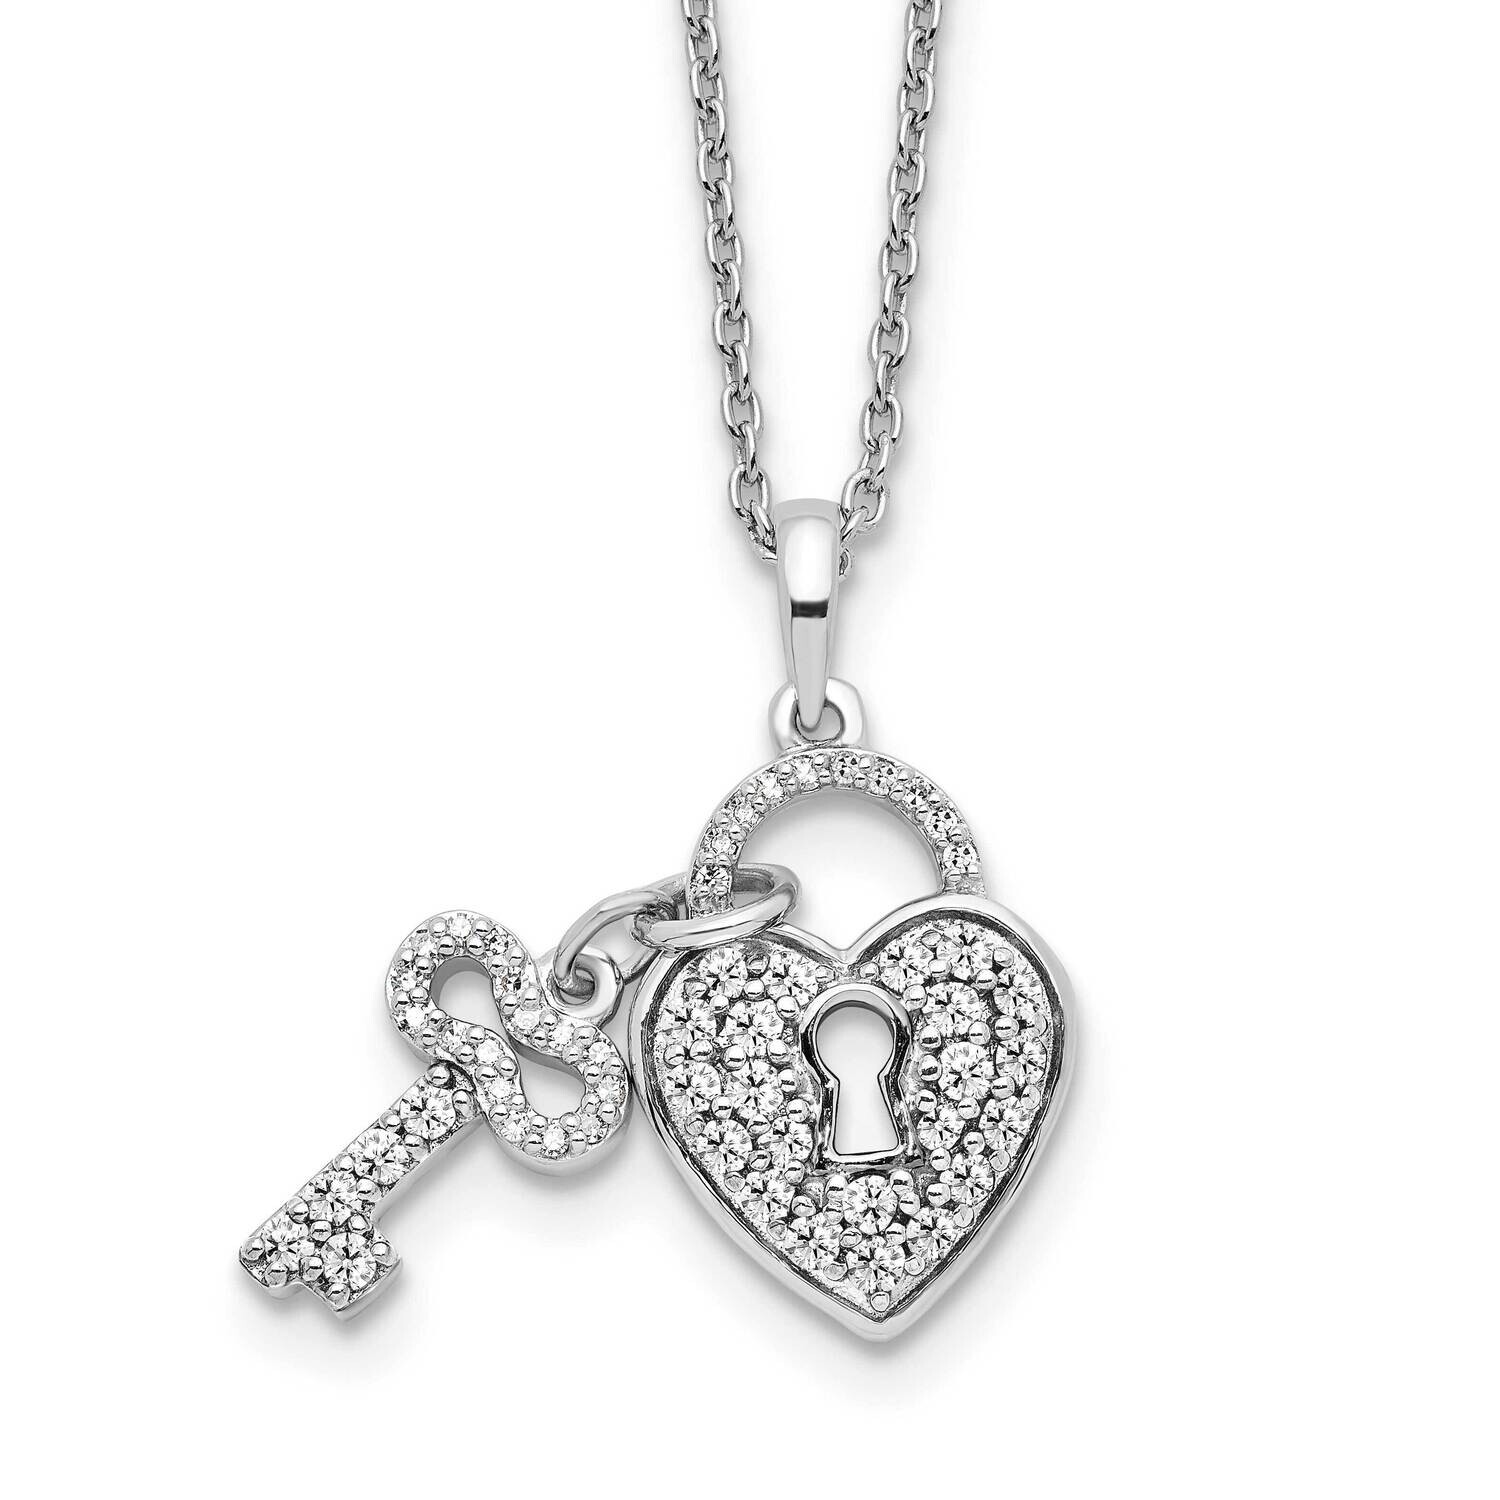 Diamond Heart Lock Key Pendant Necklace 14k White Gold PM9682-050-WLG-18